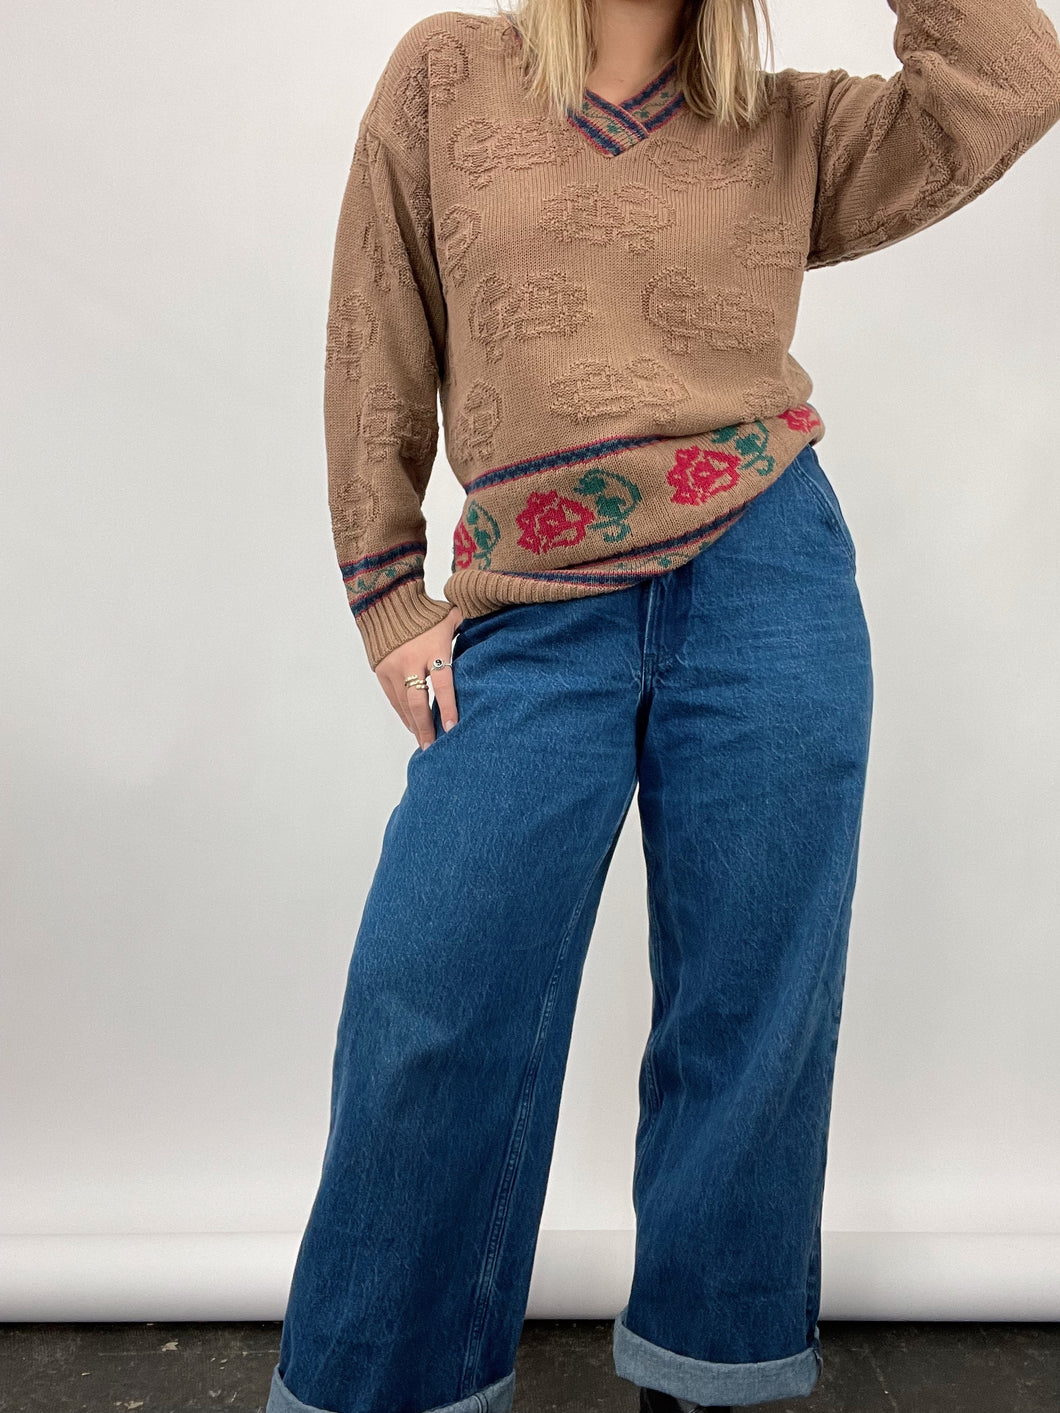 80s Brown Patterned V-Neck Sweater (M)